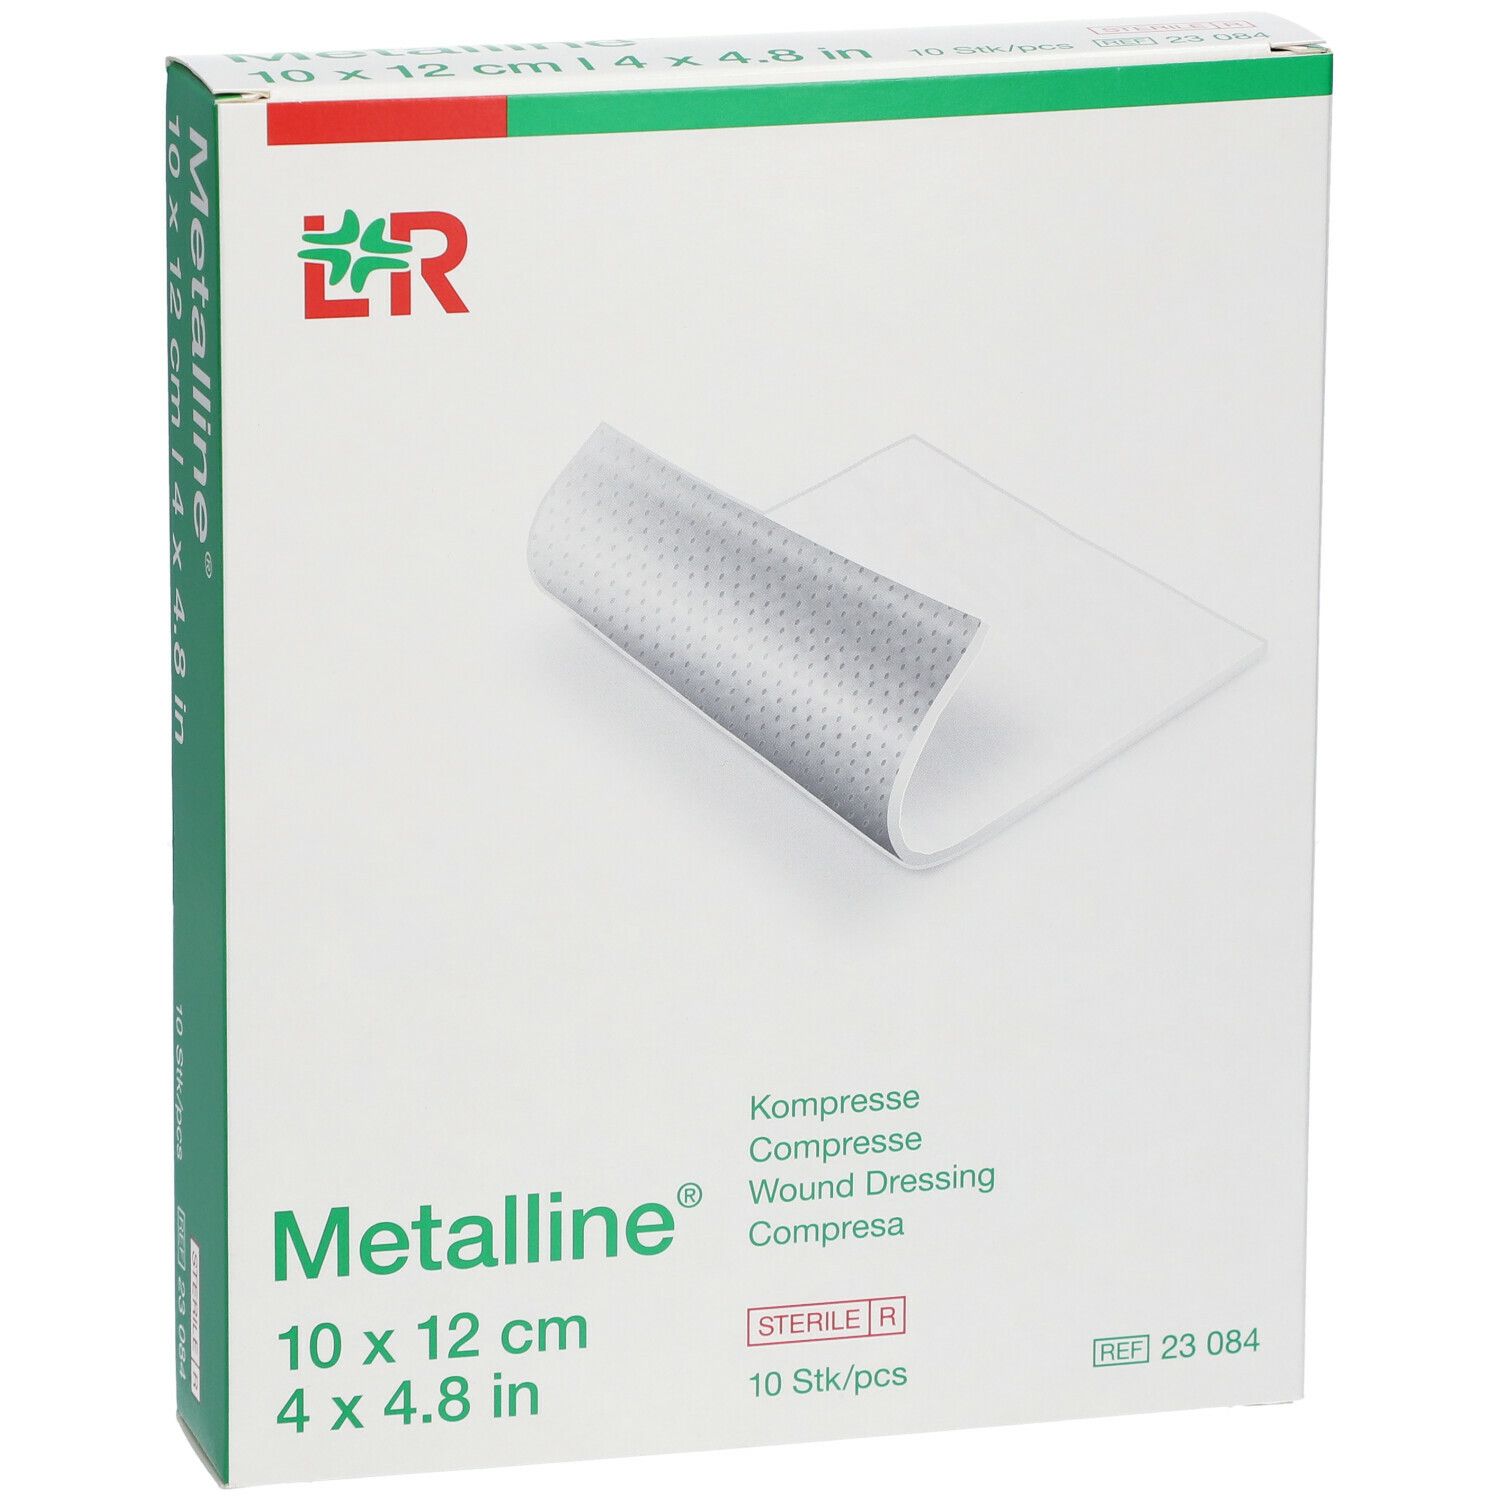 Metalline® Compresse 10 x 12 cm